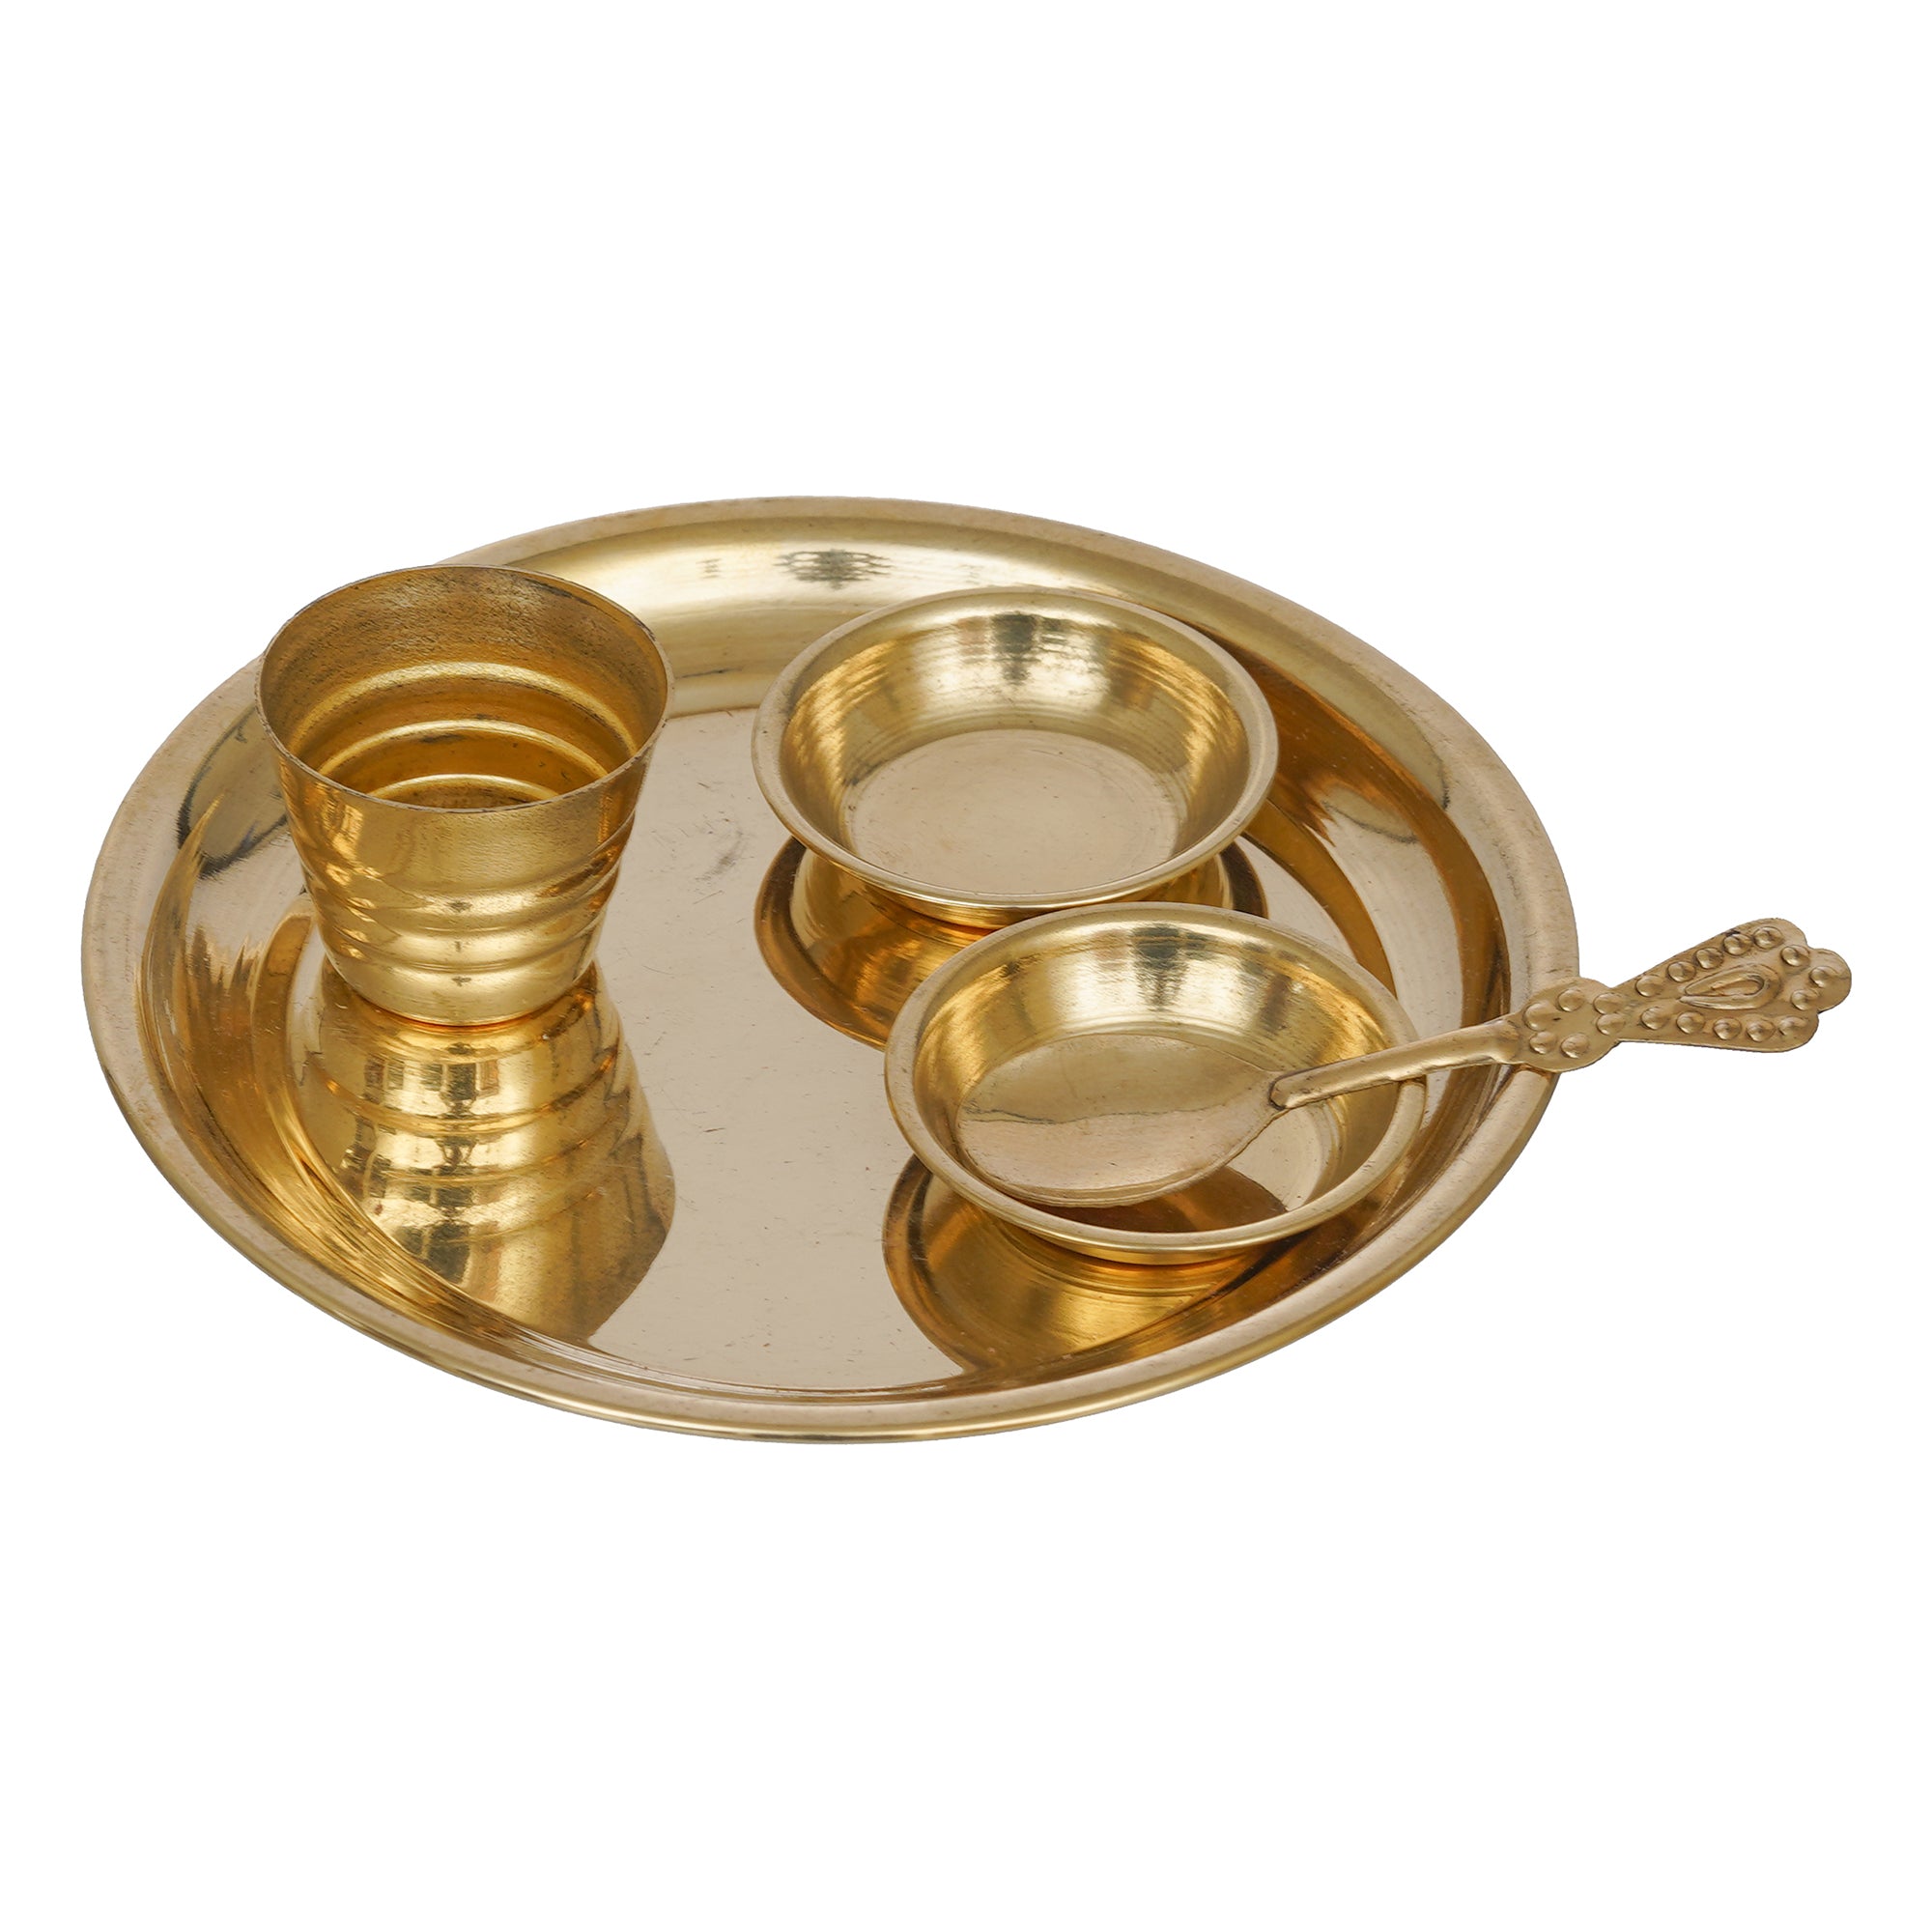 eCraftIndia Golden Brass Pooja Thali With 2 Bowls, 1 Spoon & 1 Glass 5